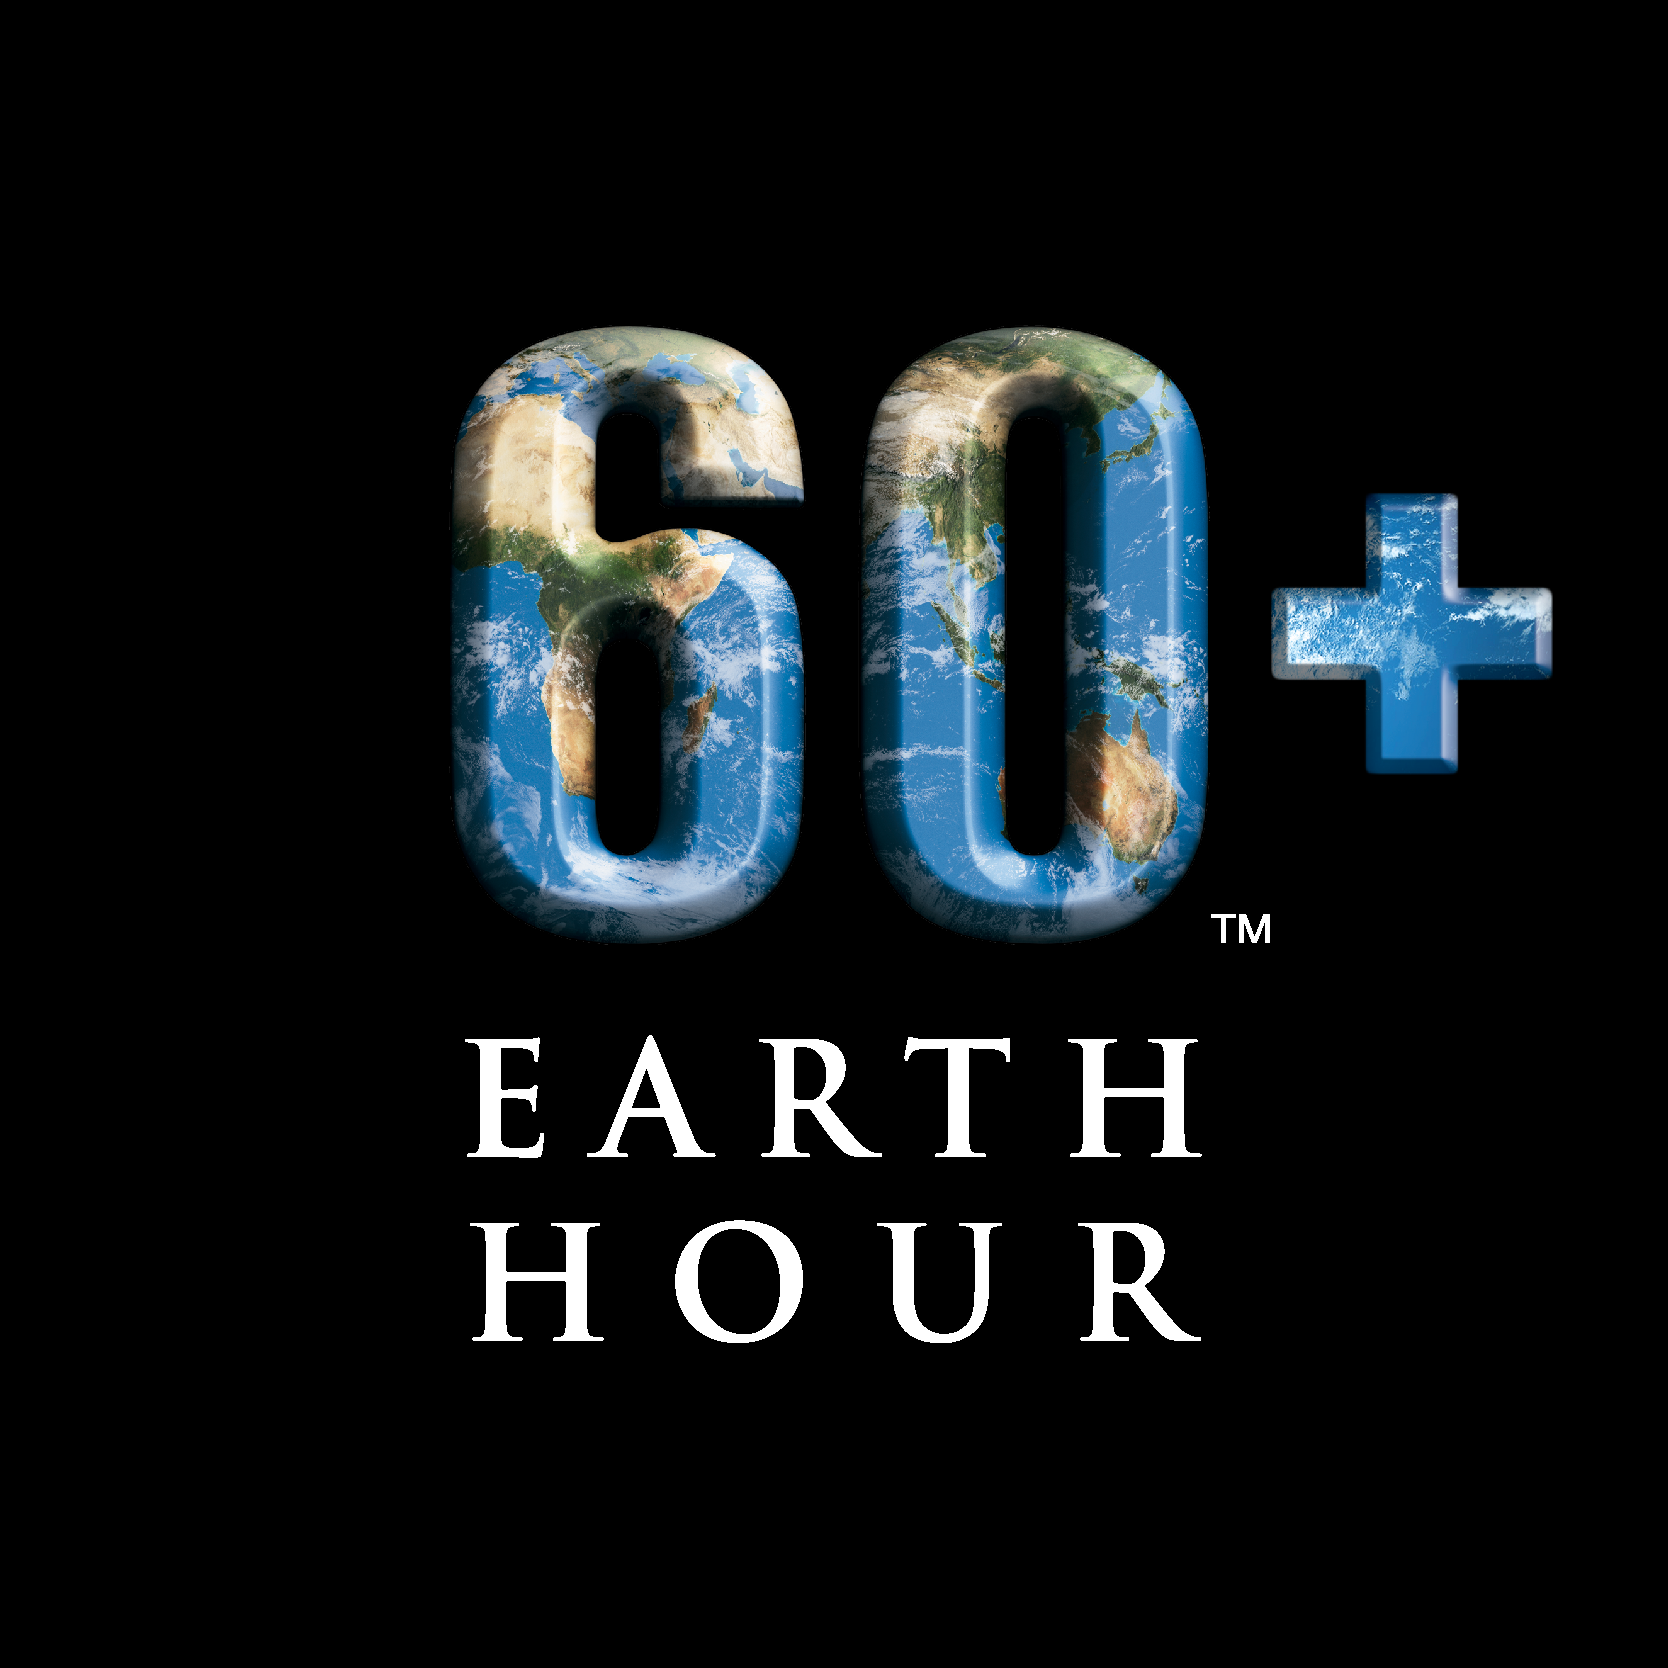 EH Logo (c) www.earthhour.org